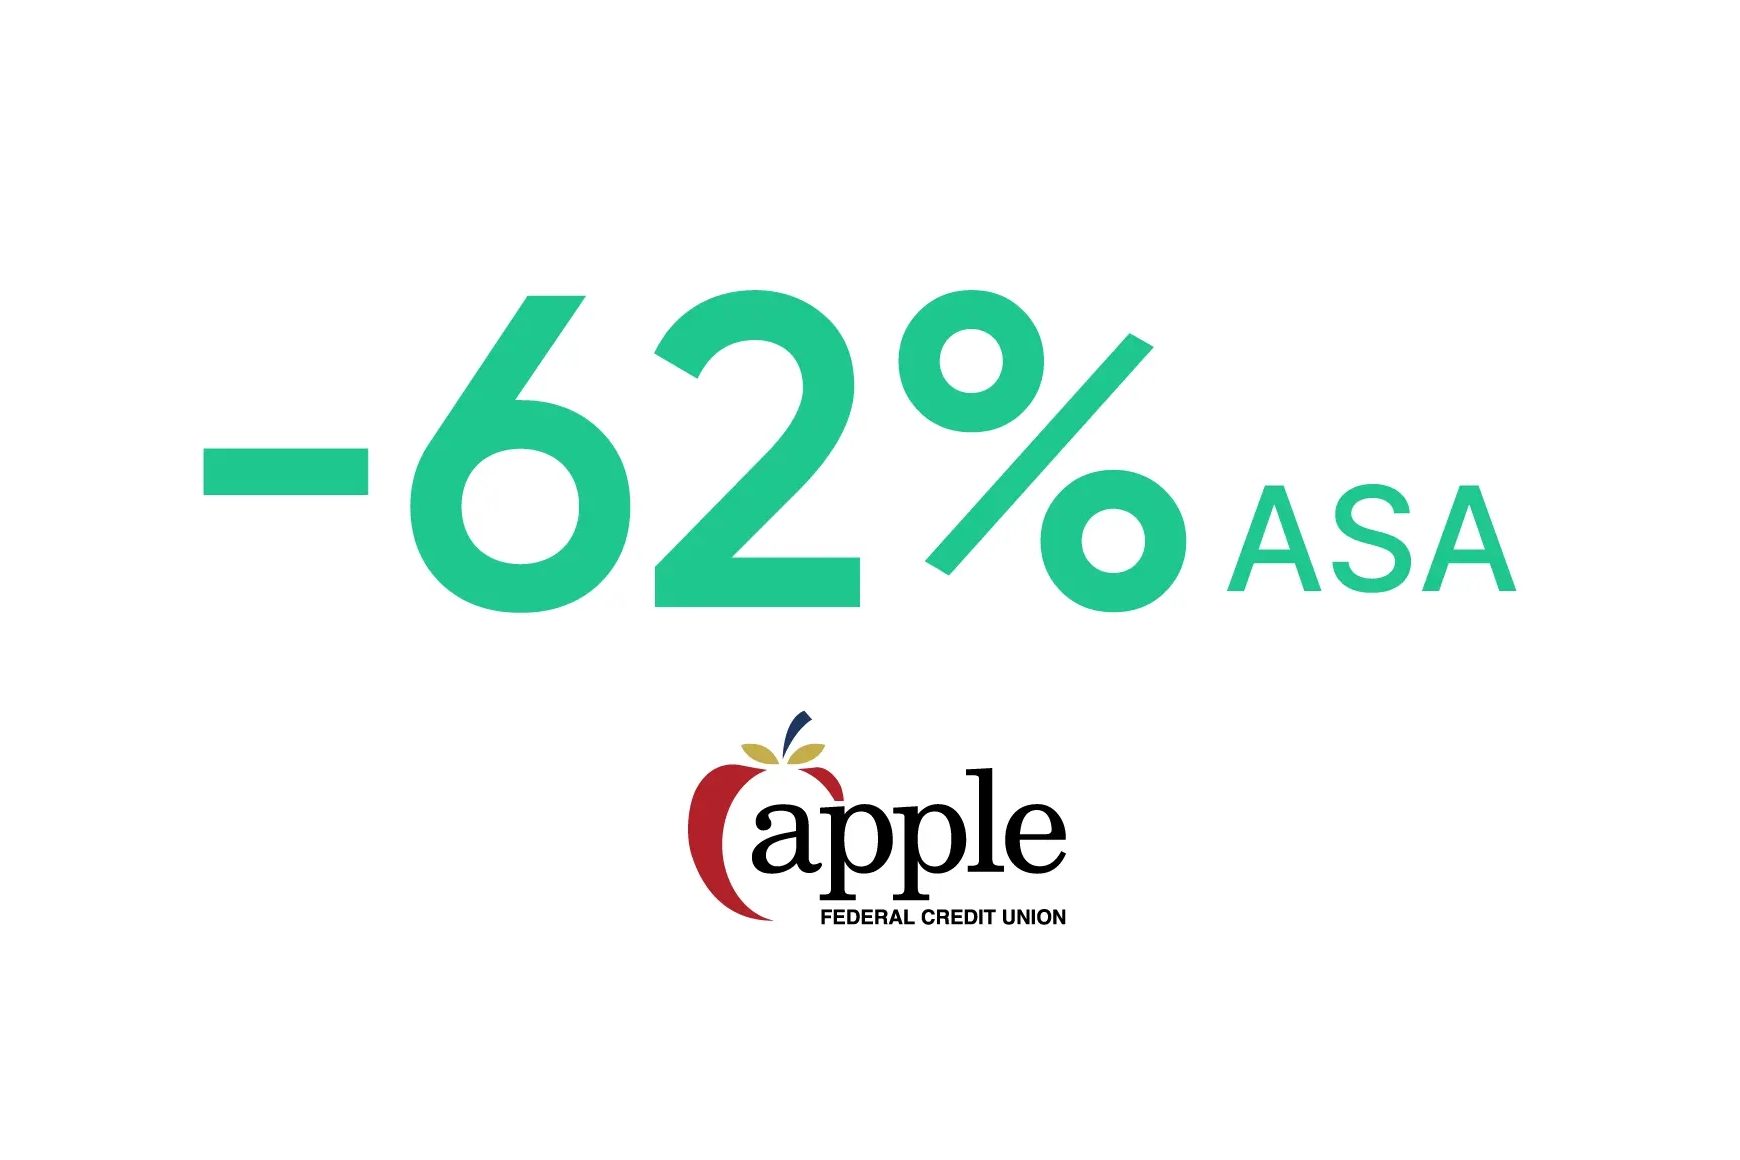 Apple Federal Credit Union redujo la ASA en un 62 %